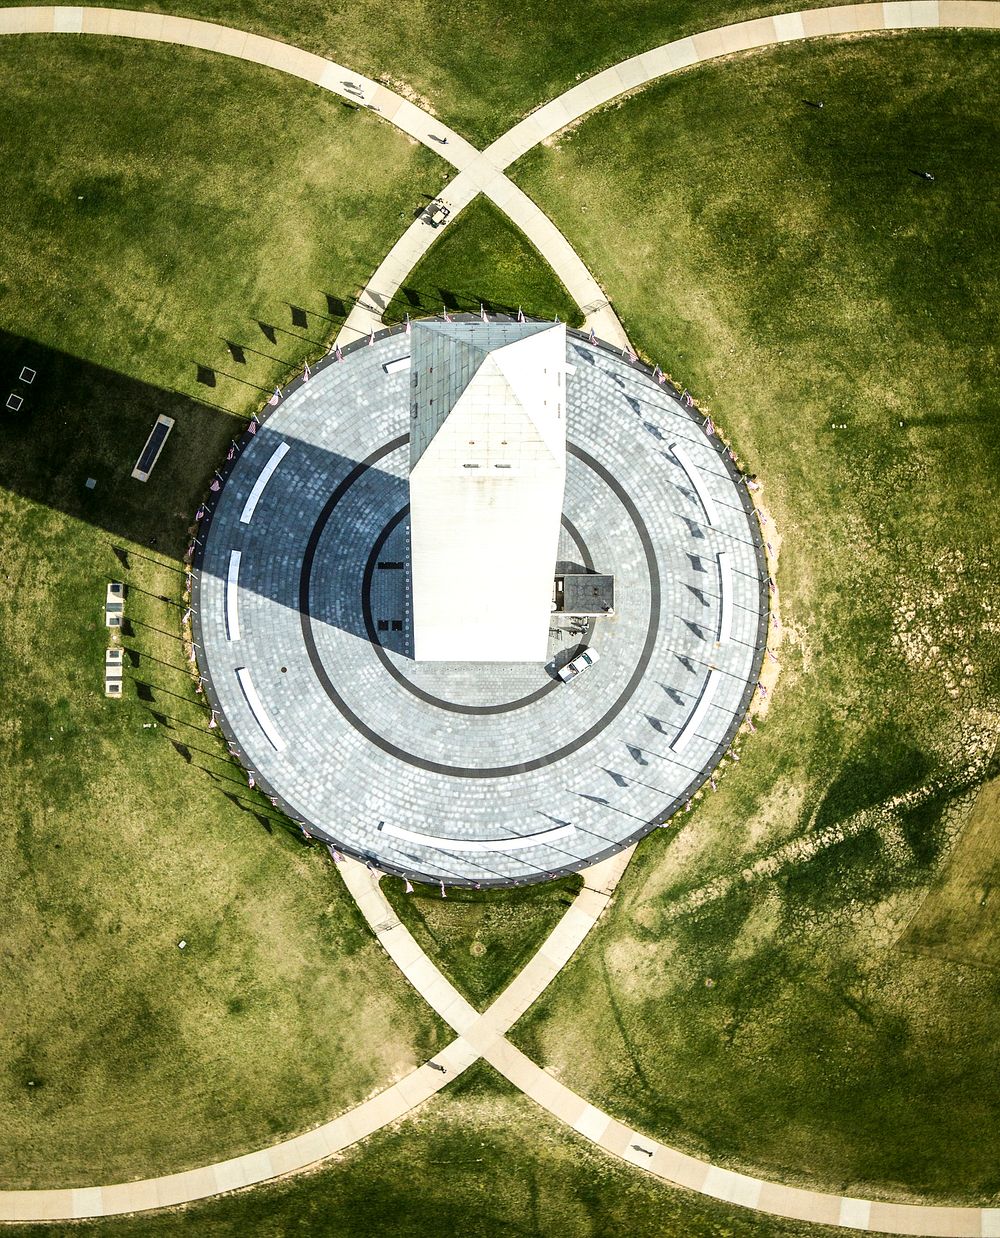 Aerial view of the Washington Monument in Washington.Original from NASA. Digitally enhanced by rawpixel.